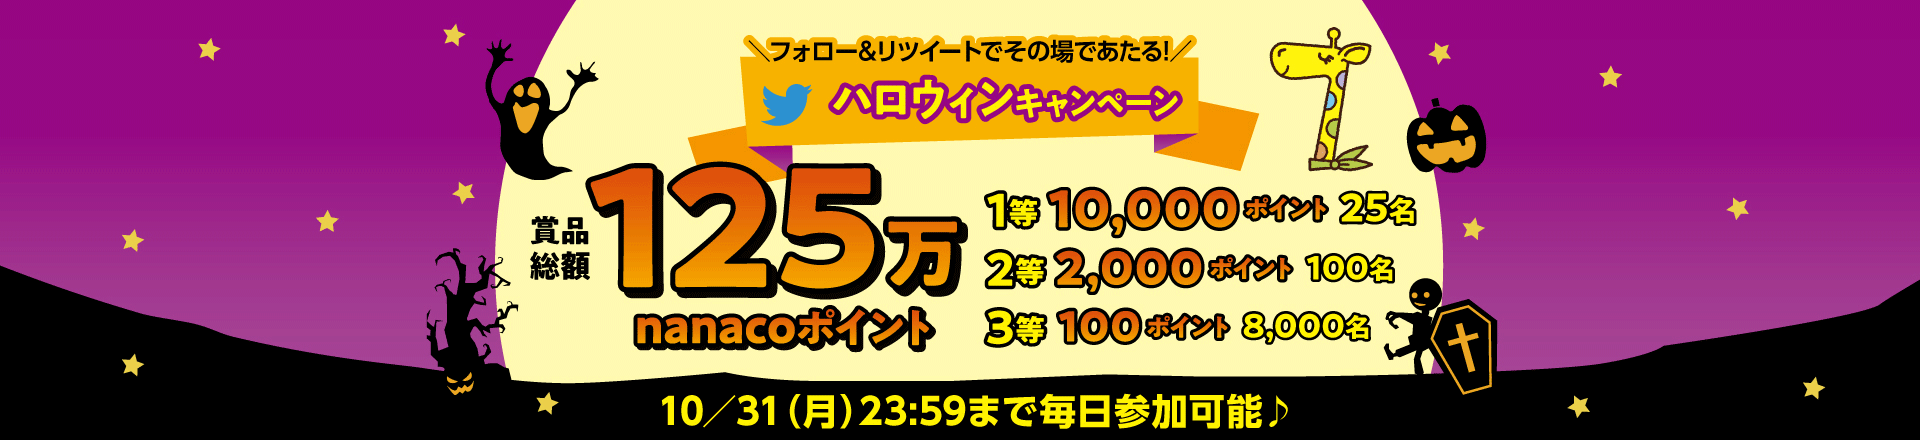 Twitter限定「＼最大1万ポイント当たる!／nanacoのハロウィンキャンペーン」